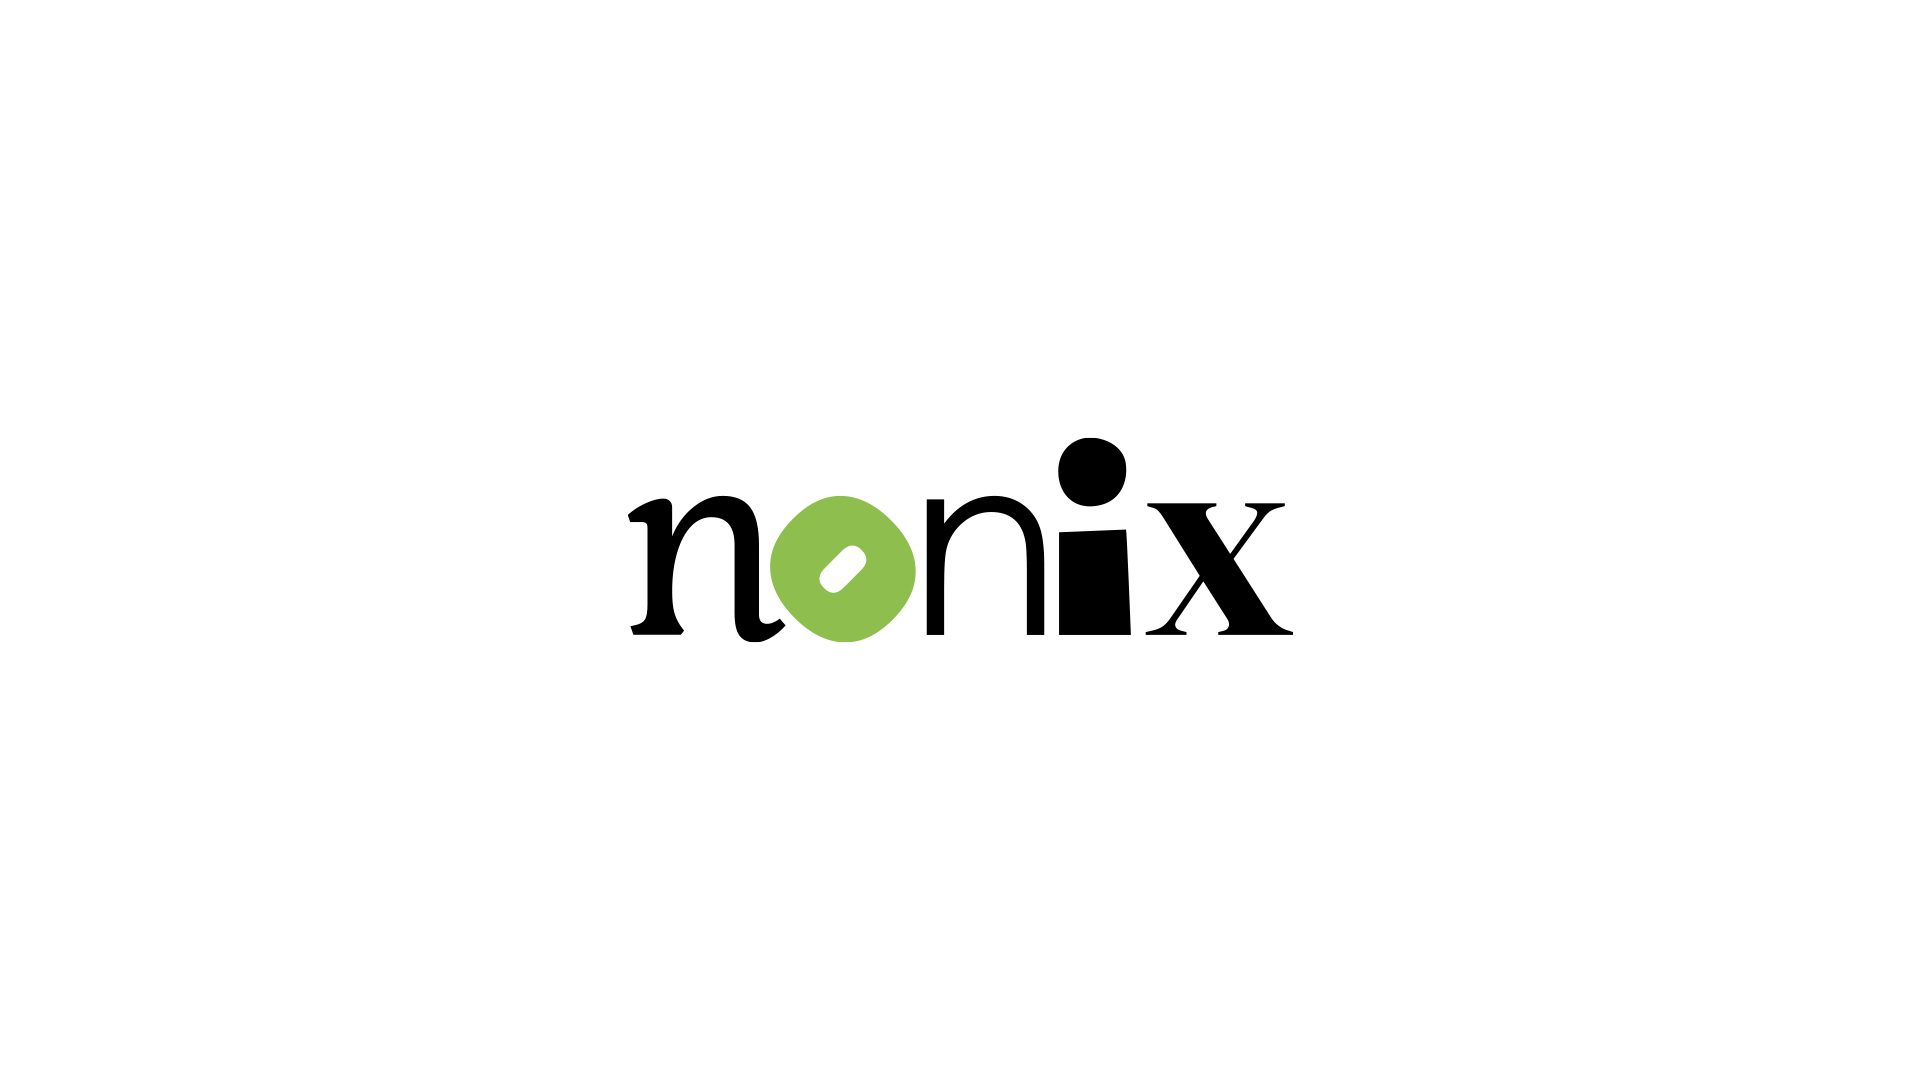 1-nonix-world-brand-design.jpg